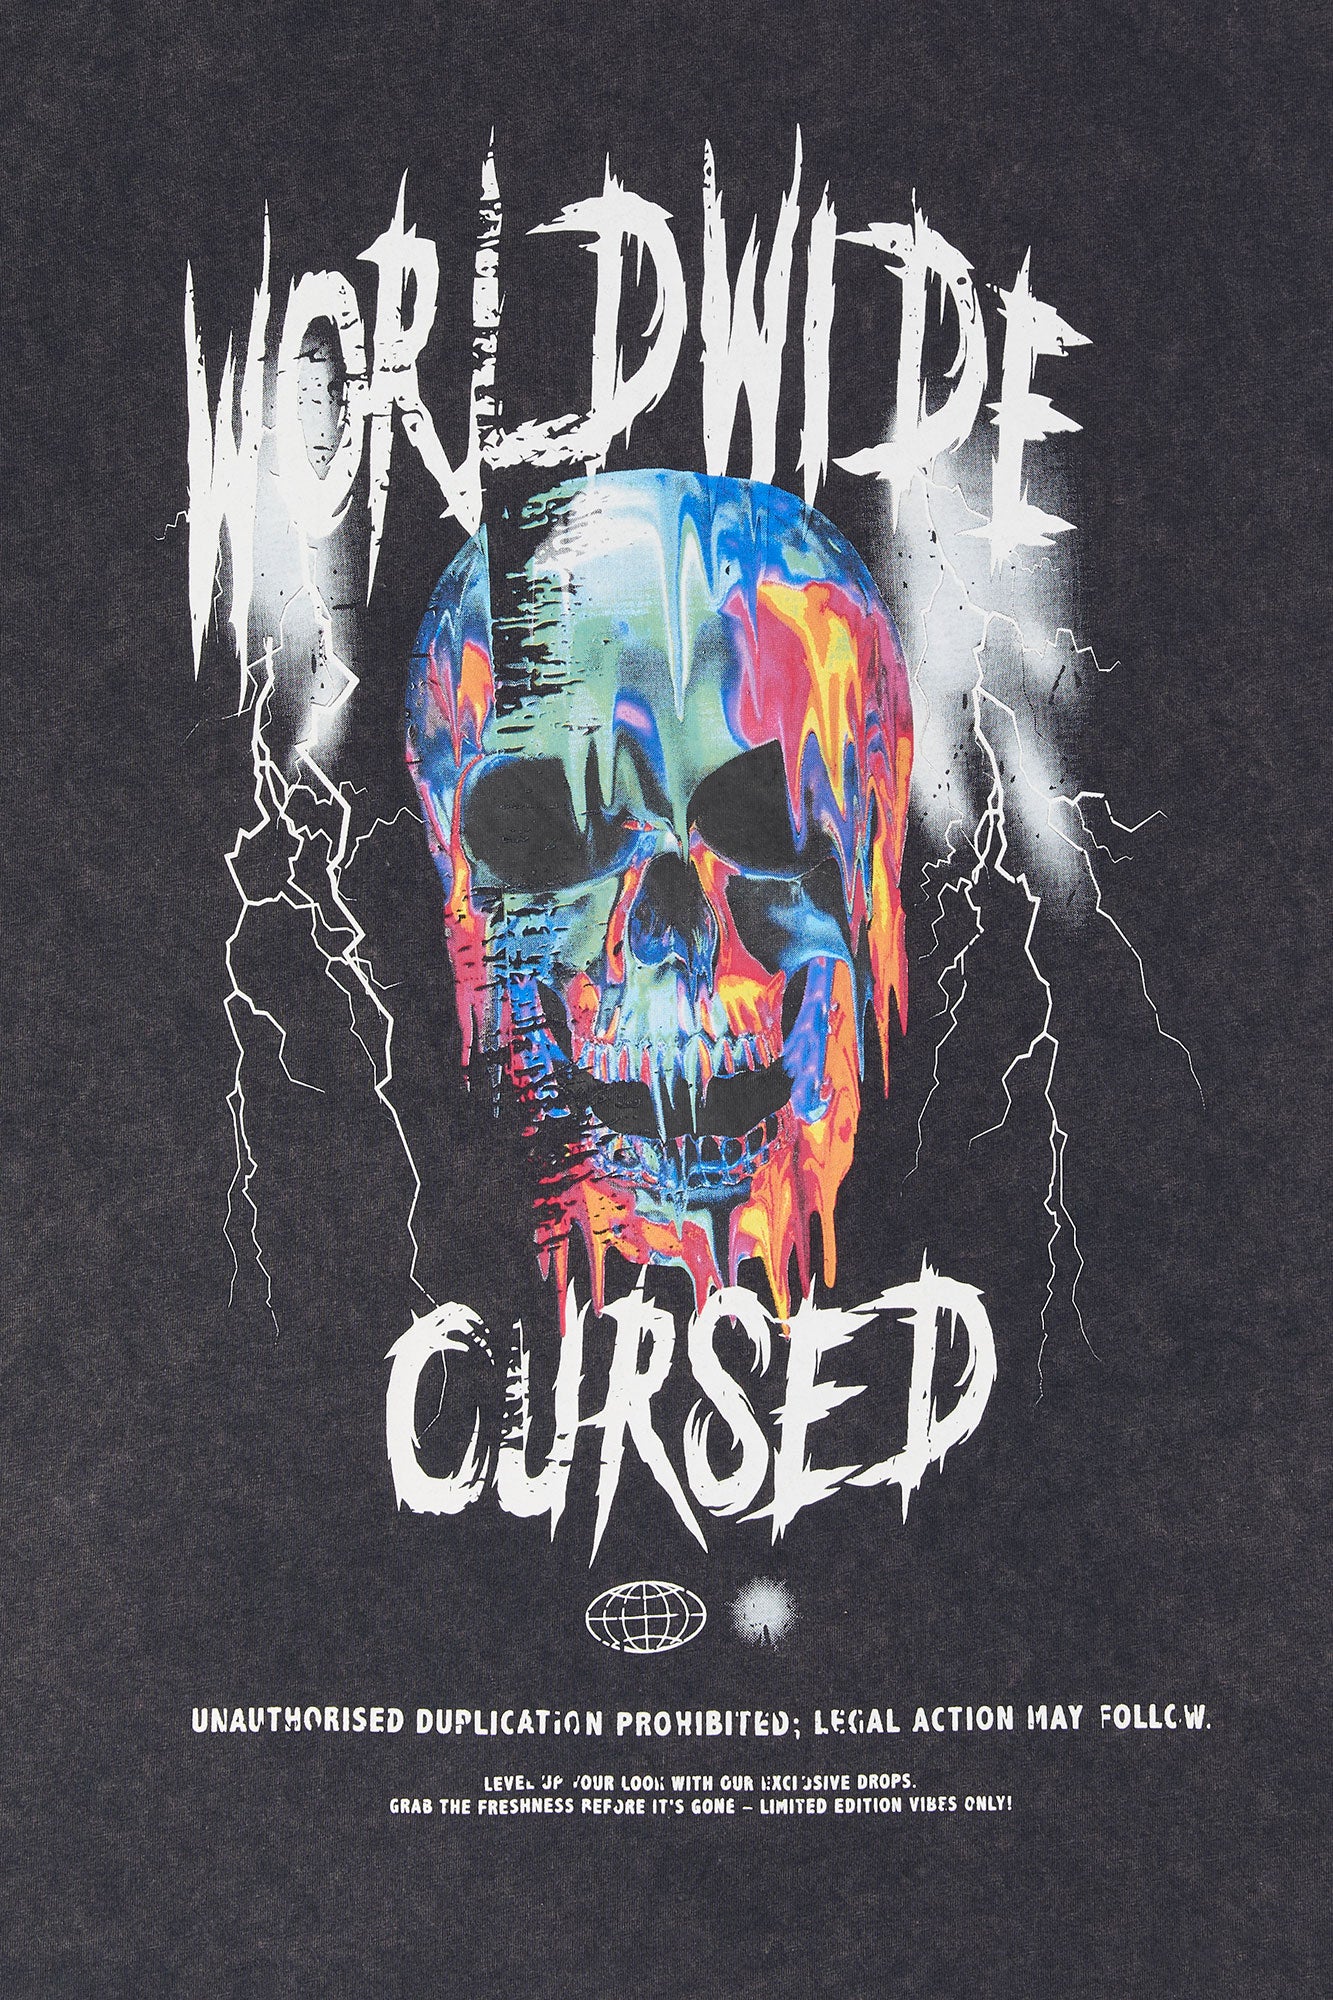 Worldwide Cursed Graphic T-Shirt